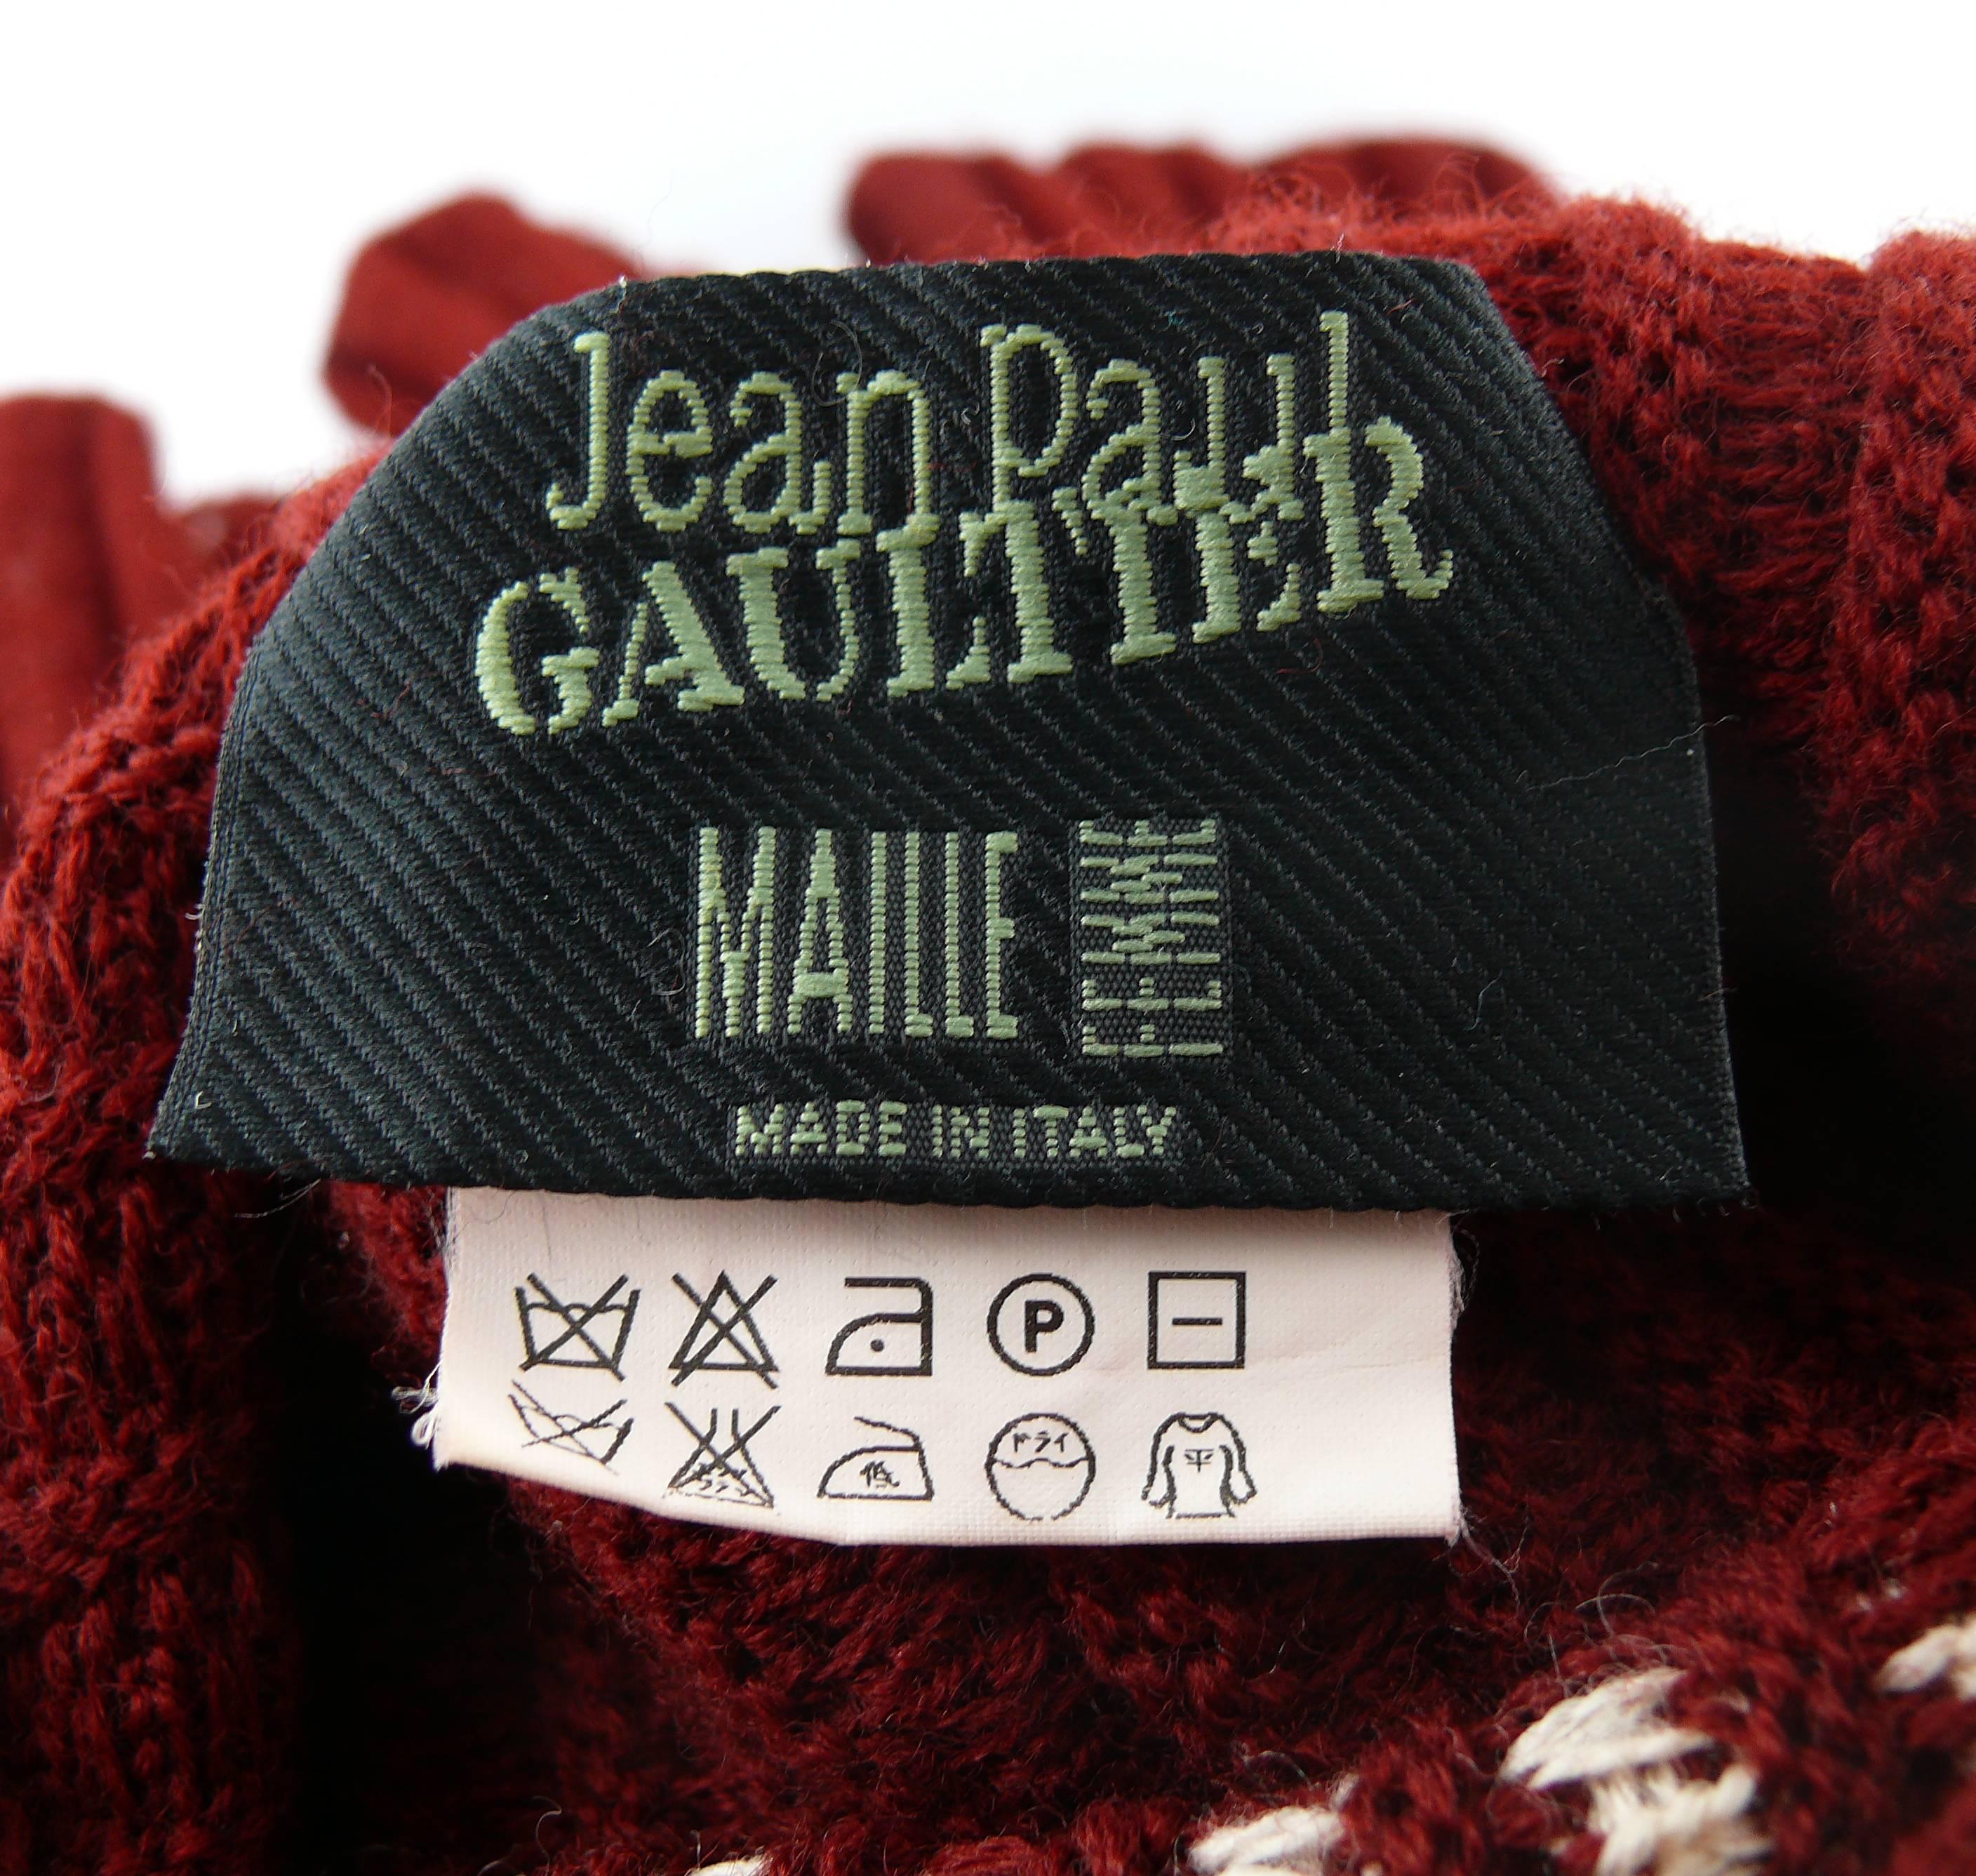 Jean Paul Gaultier Vintage Optical Illusion Dietrich Virgin Wool Sweater Size L 1